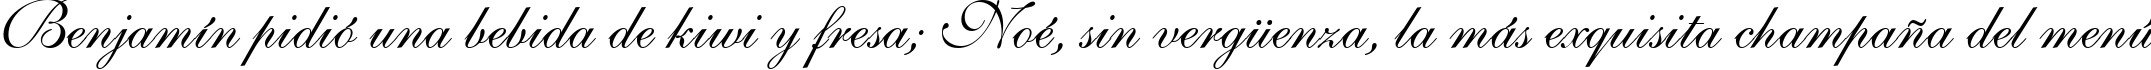 Пример написания шрифтом English 111 Presto BT текста на испанском